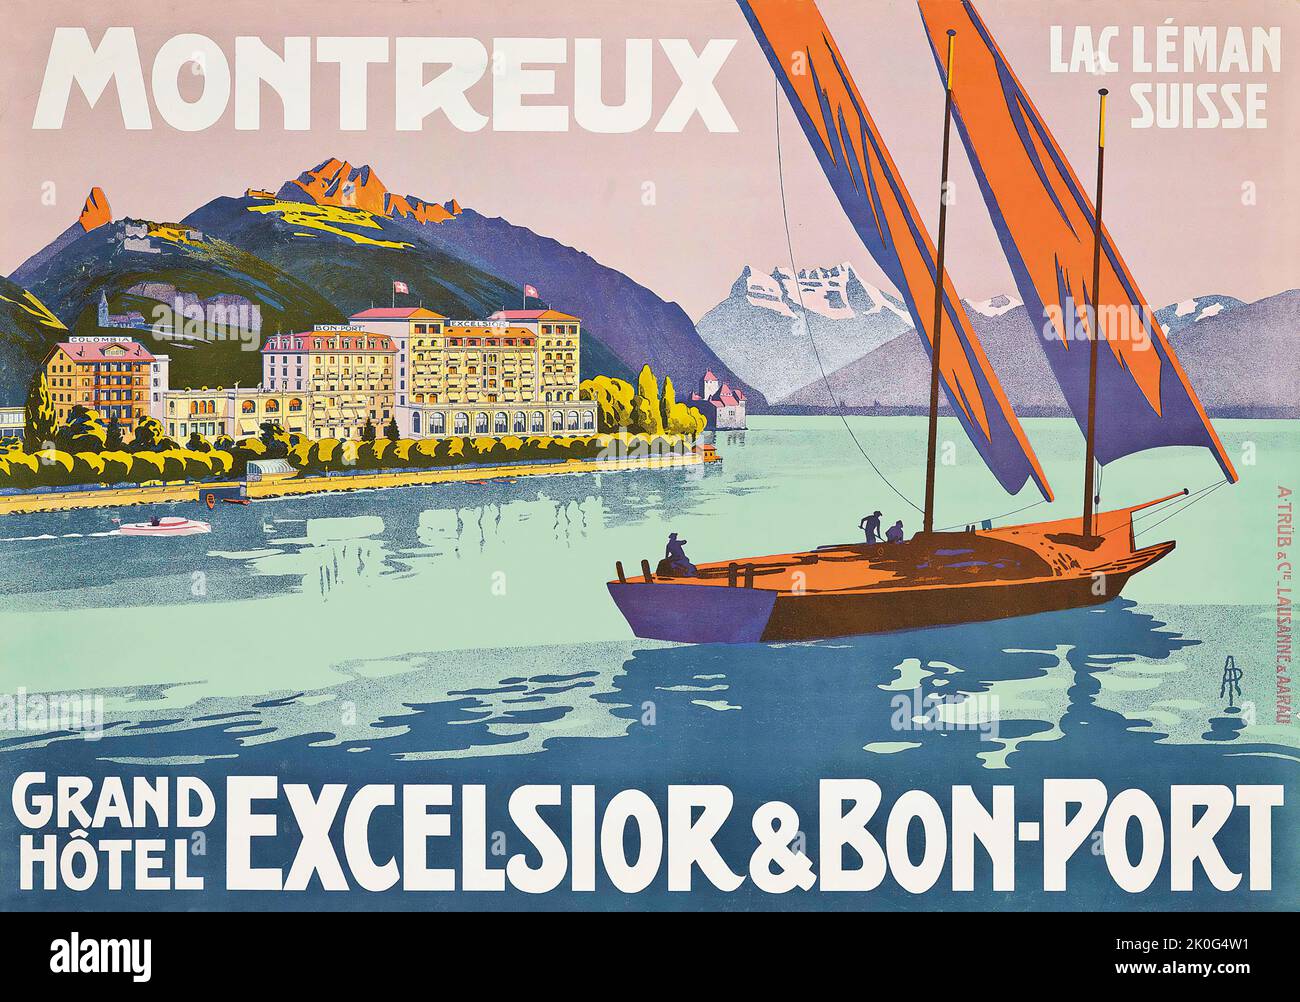 AP artwork - MONTREUX, GRAND Hôtel EXCELSIOR & BON PORT - Schweiz, Suisse, Svizzera - Poster di viaggio 1907. Foto Stock